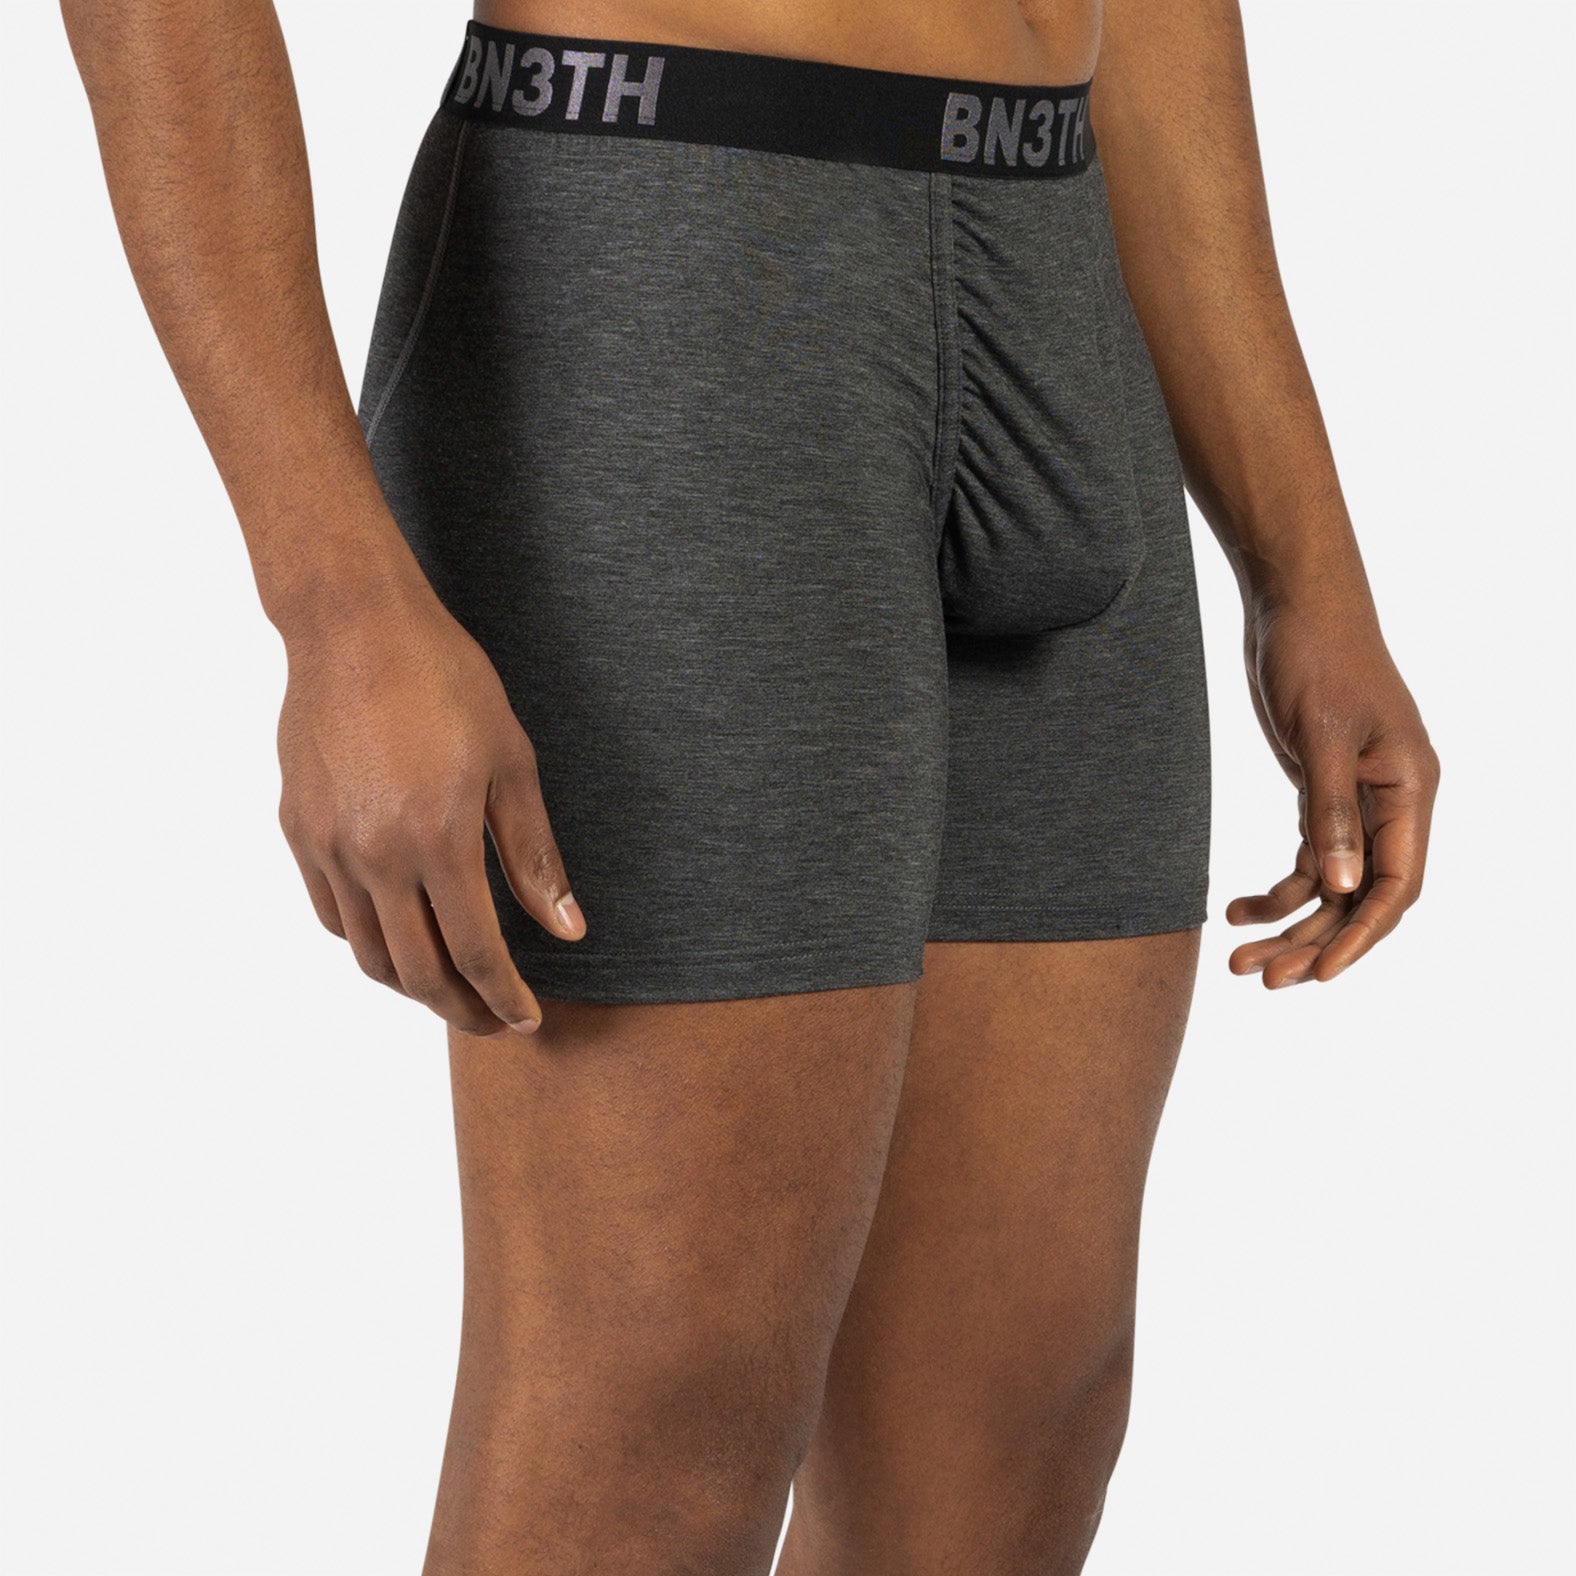 Bn3Th Underwear For Men - PRFO Sports